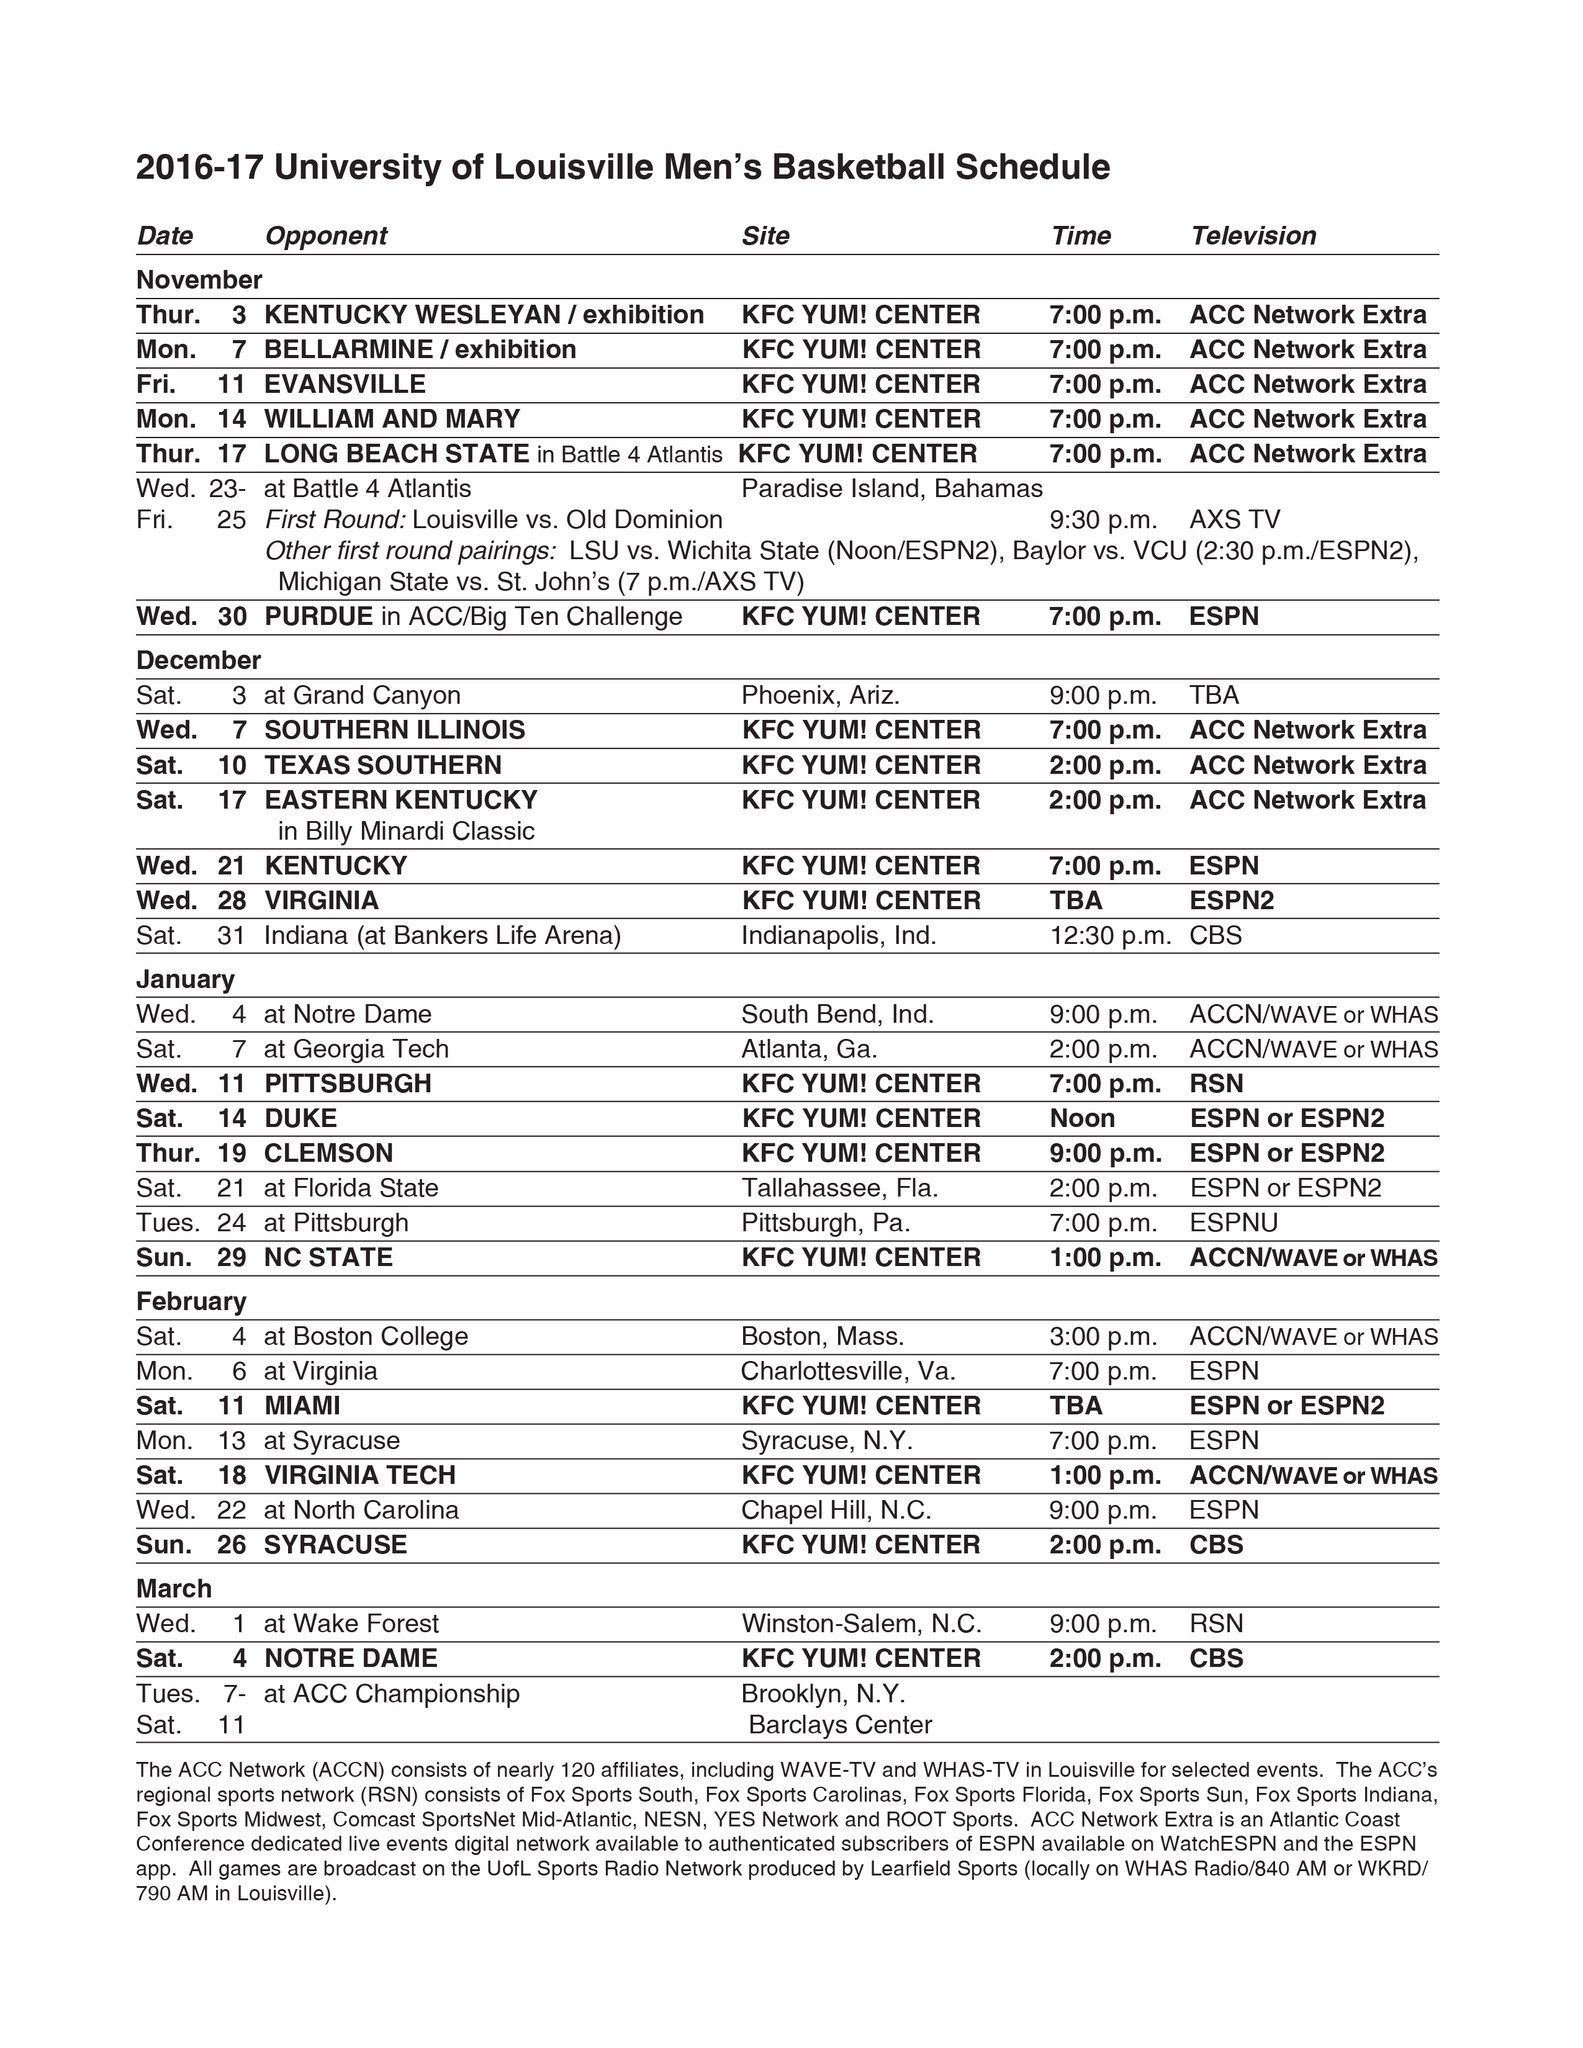 2016-17 Men’s Basketball Schedule | Cardinal Sports Zone